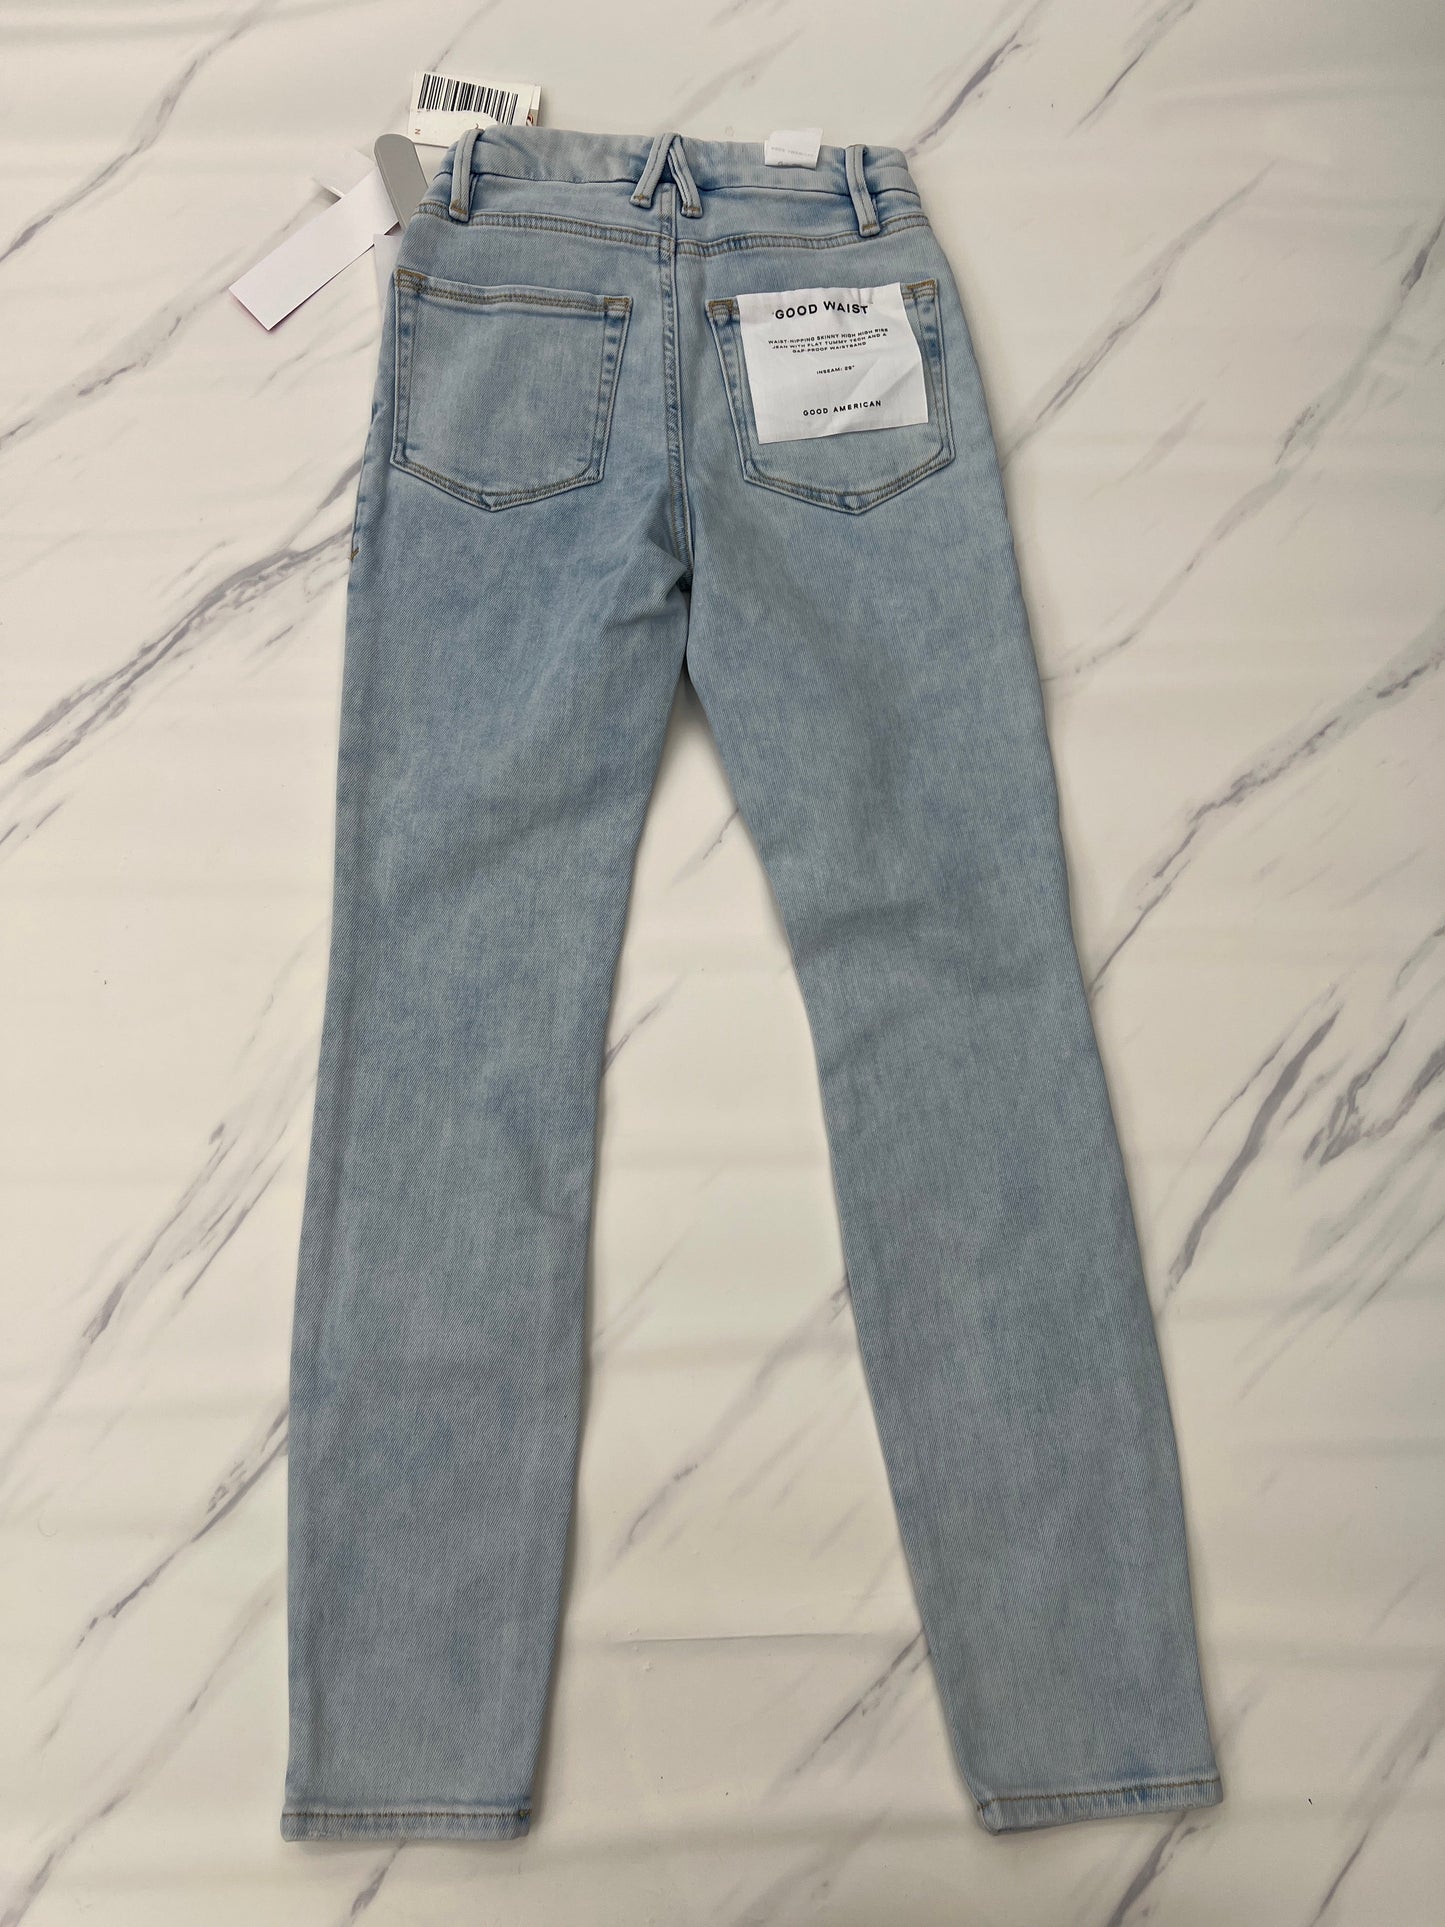 Jeans Designer Good American, Size 0